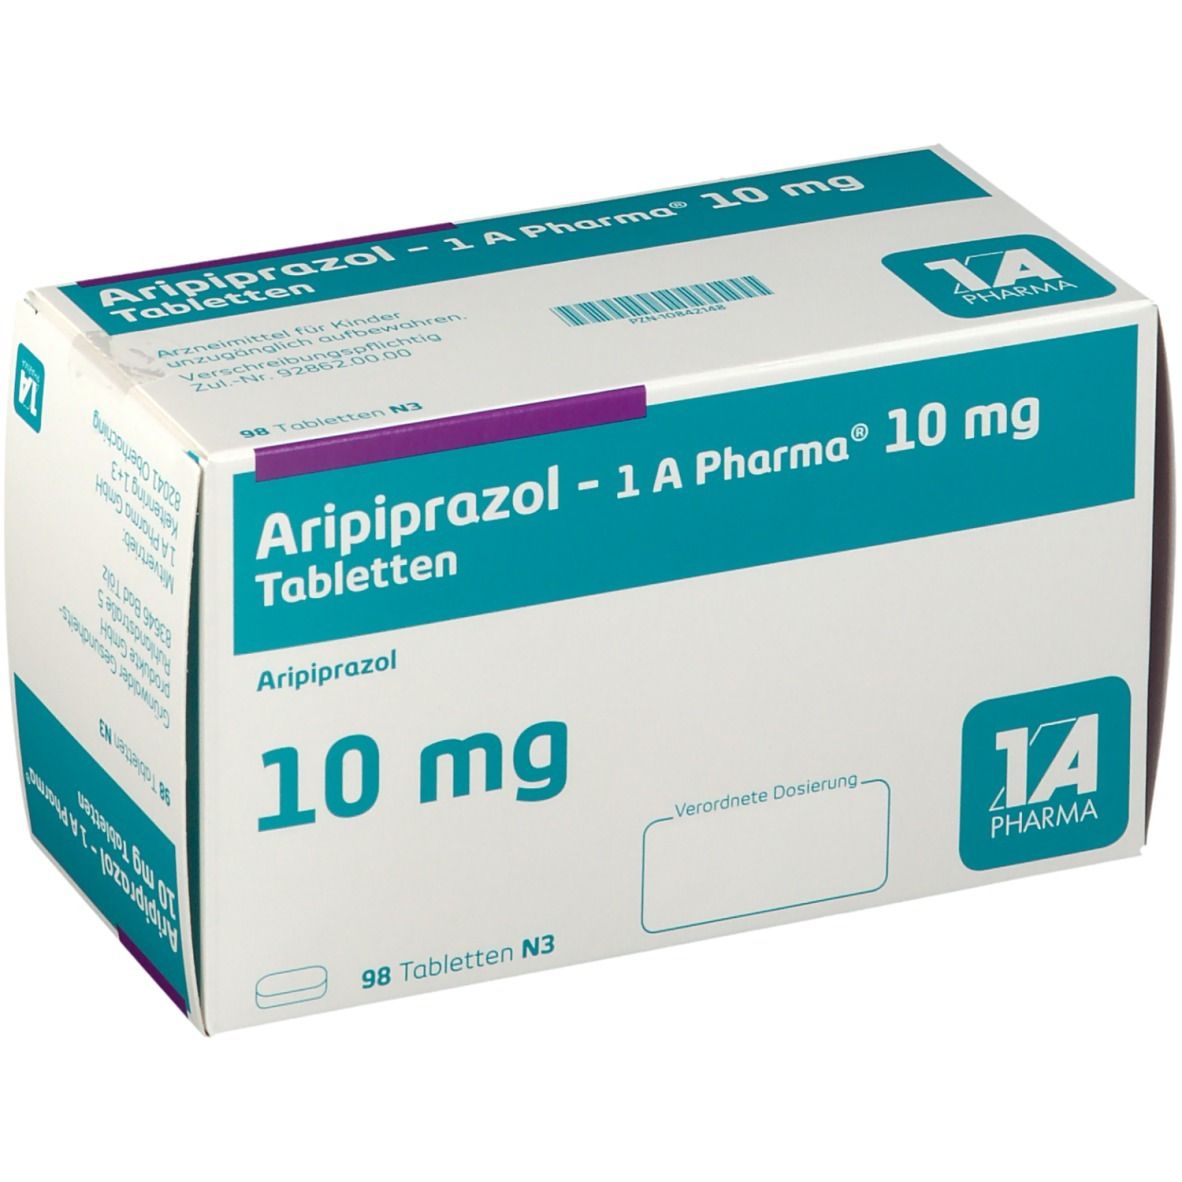 Aripiprazol 1A Pharma® 10Mg